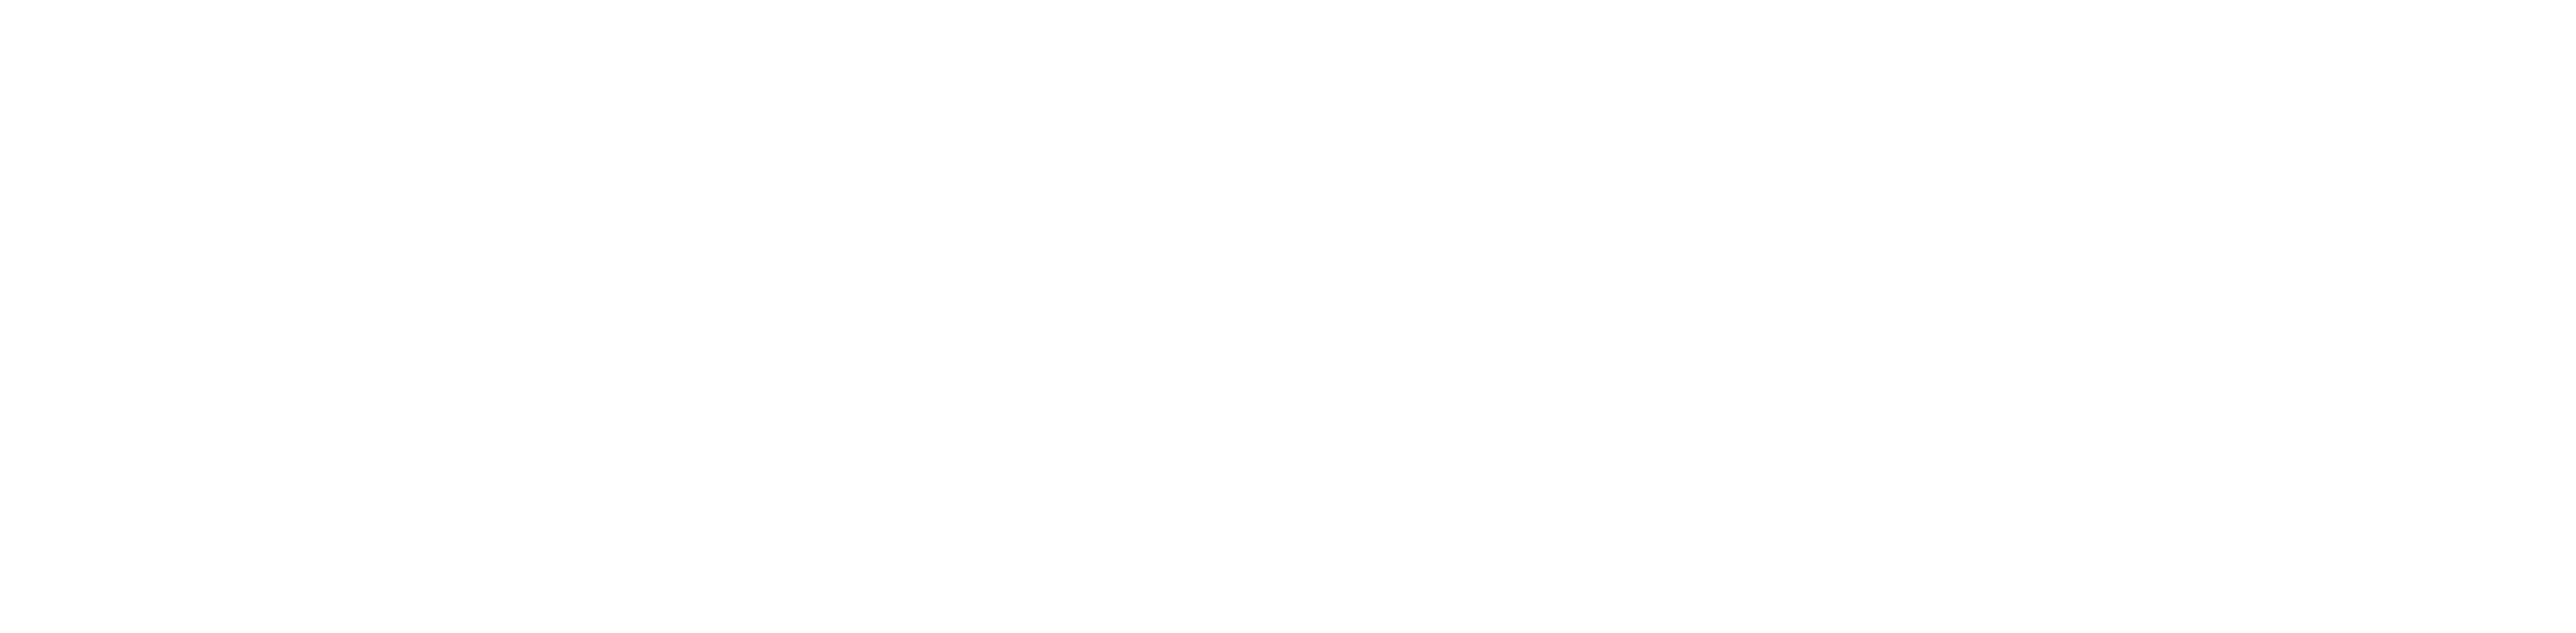 Mark of Trust Multi Scheme ISO-9001-14001-45001 logo